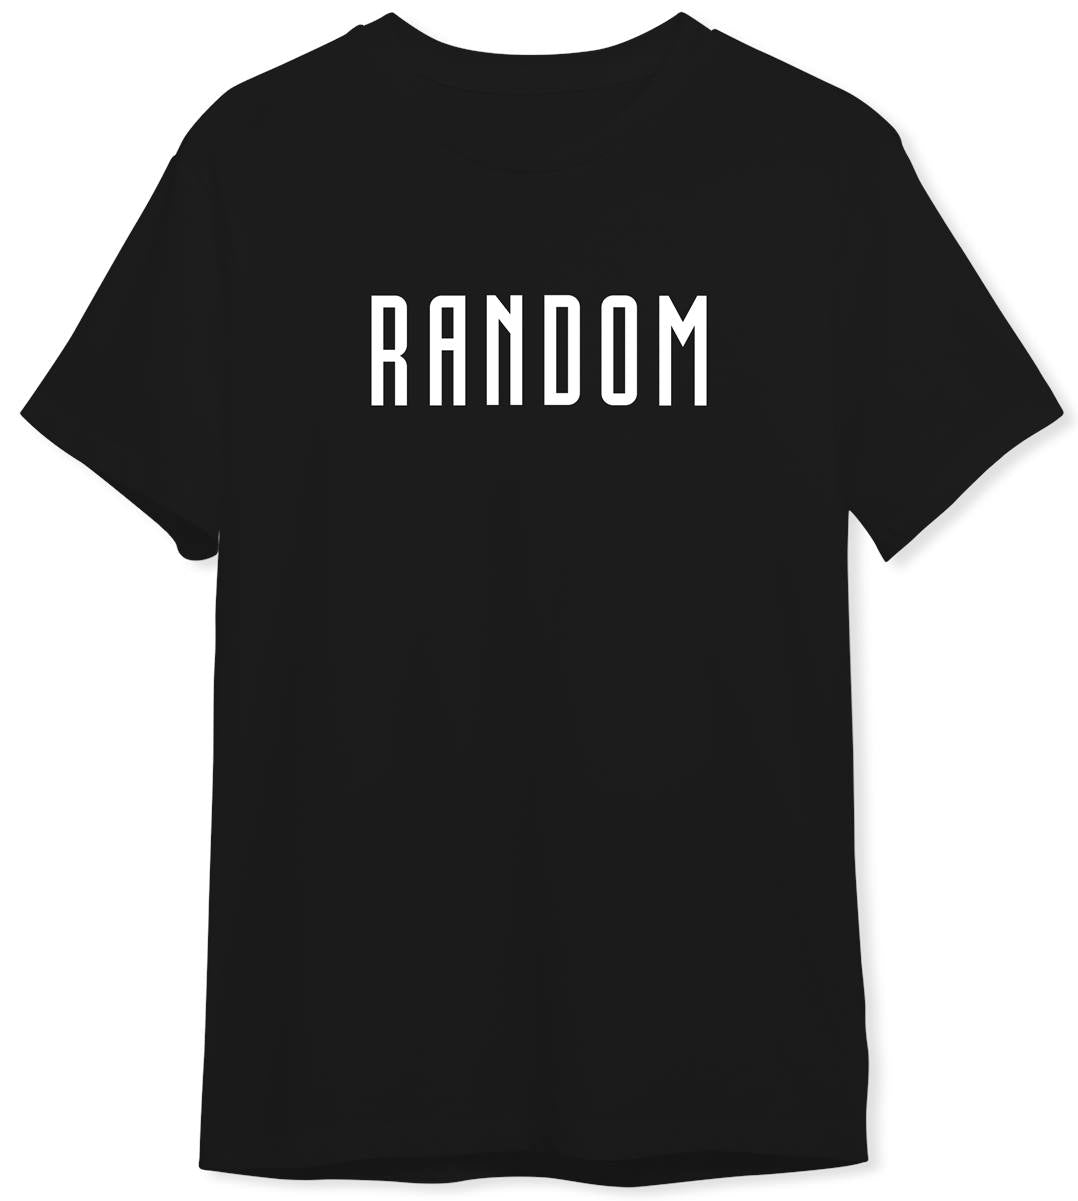 T-Shirt Herren - Random